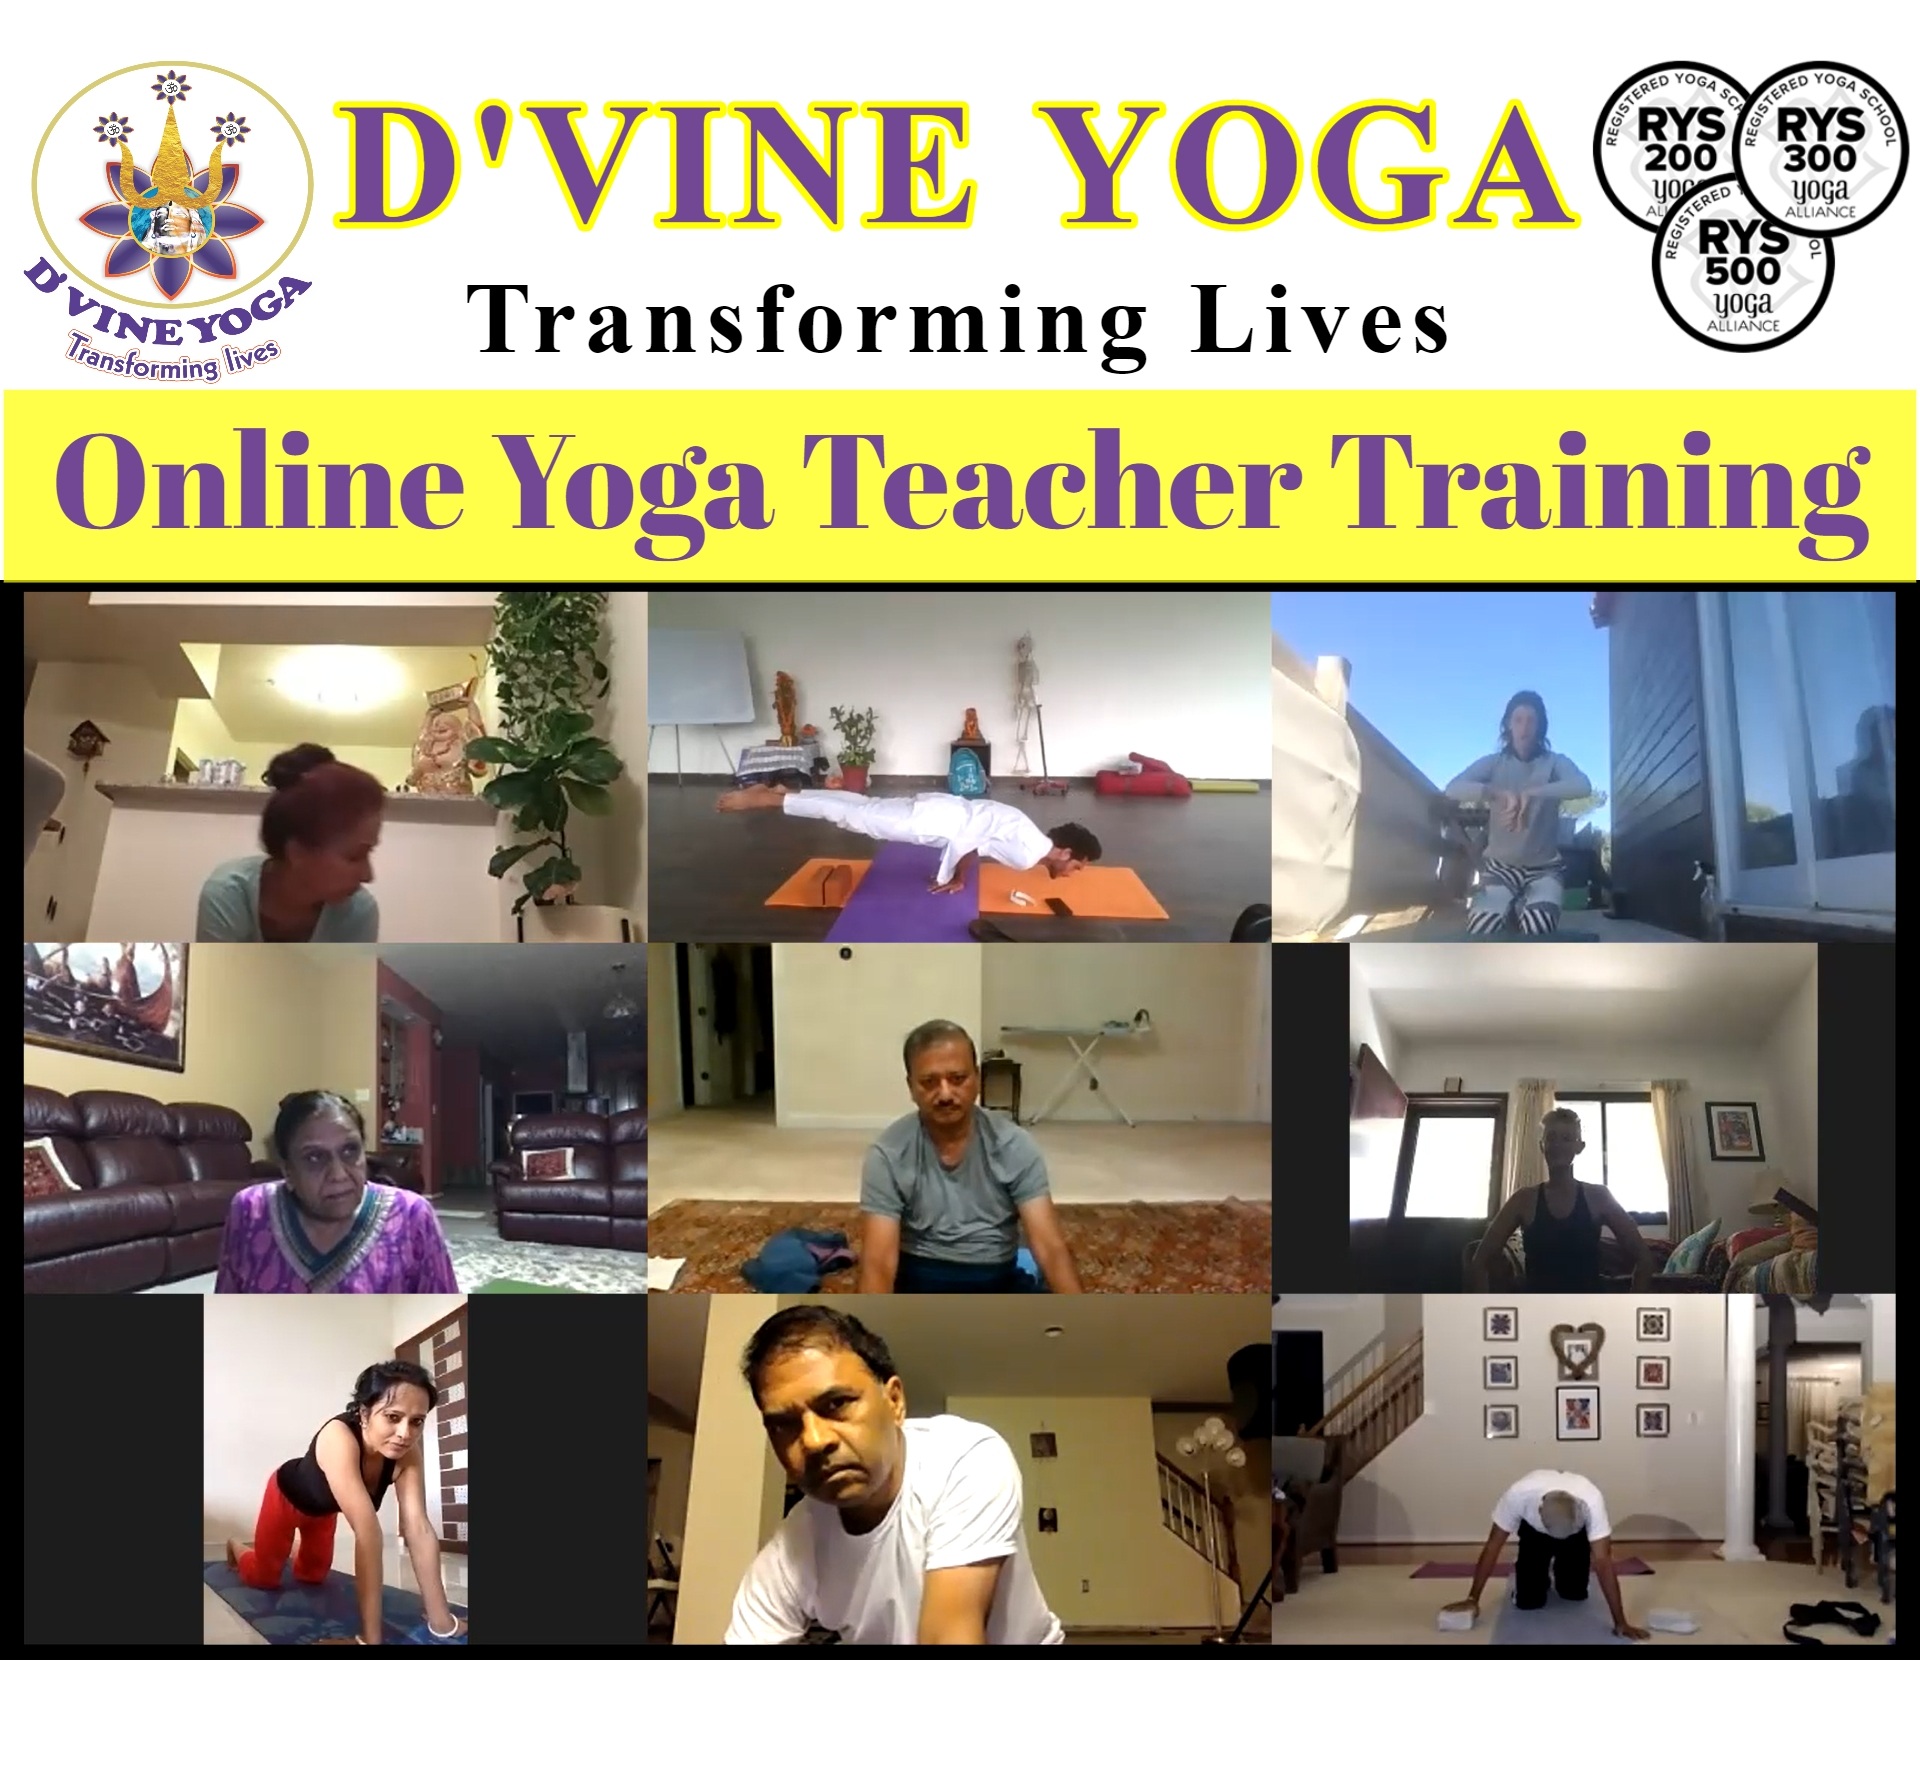 D'vine Yoga School